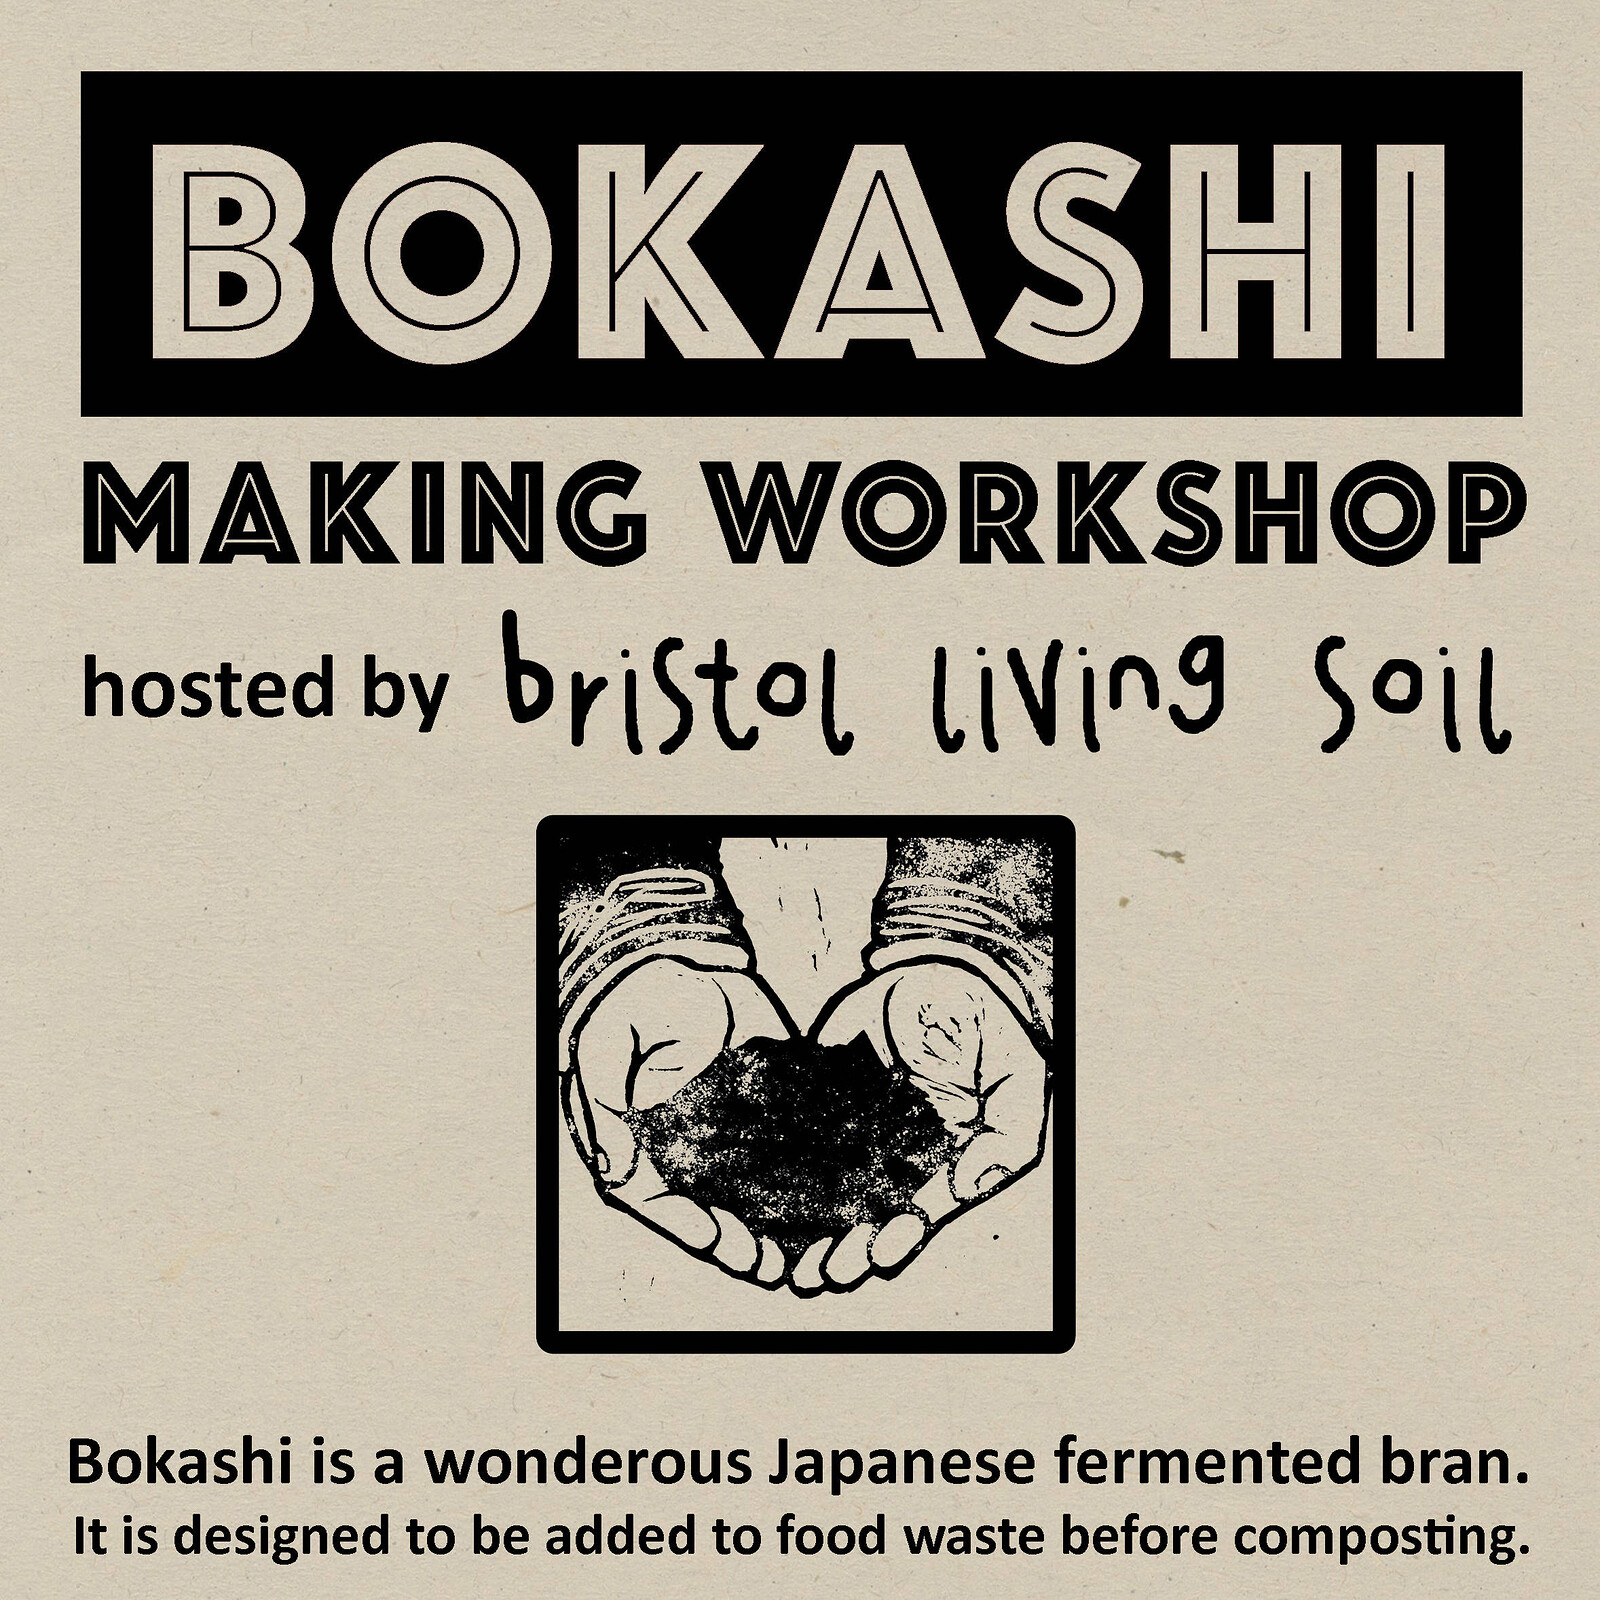 Bokashi Making Workshop with Bristol Living Soil at Bridge Farm